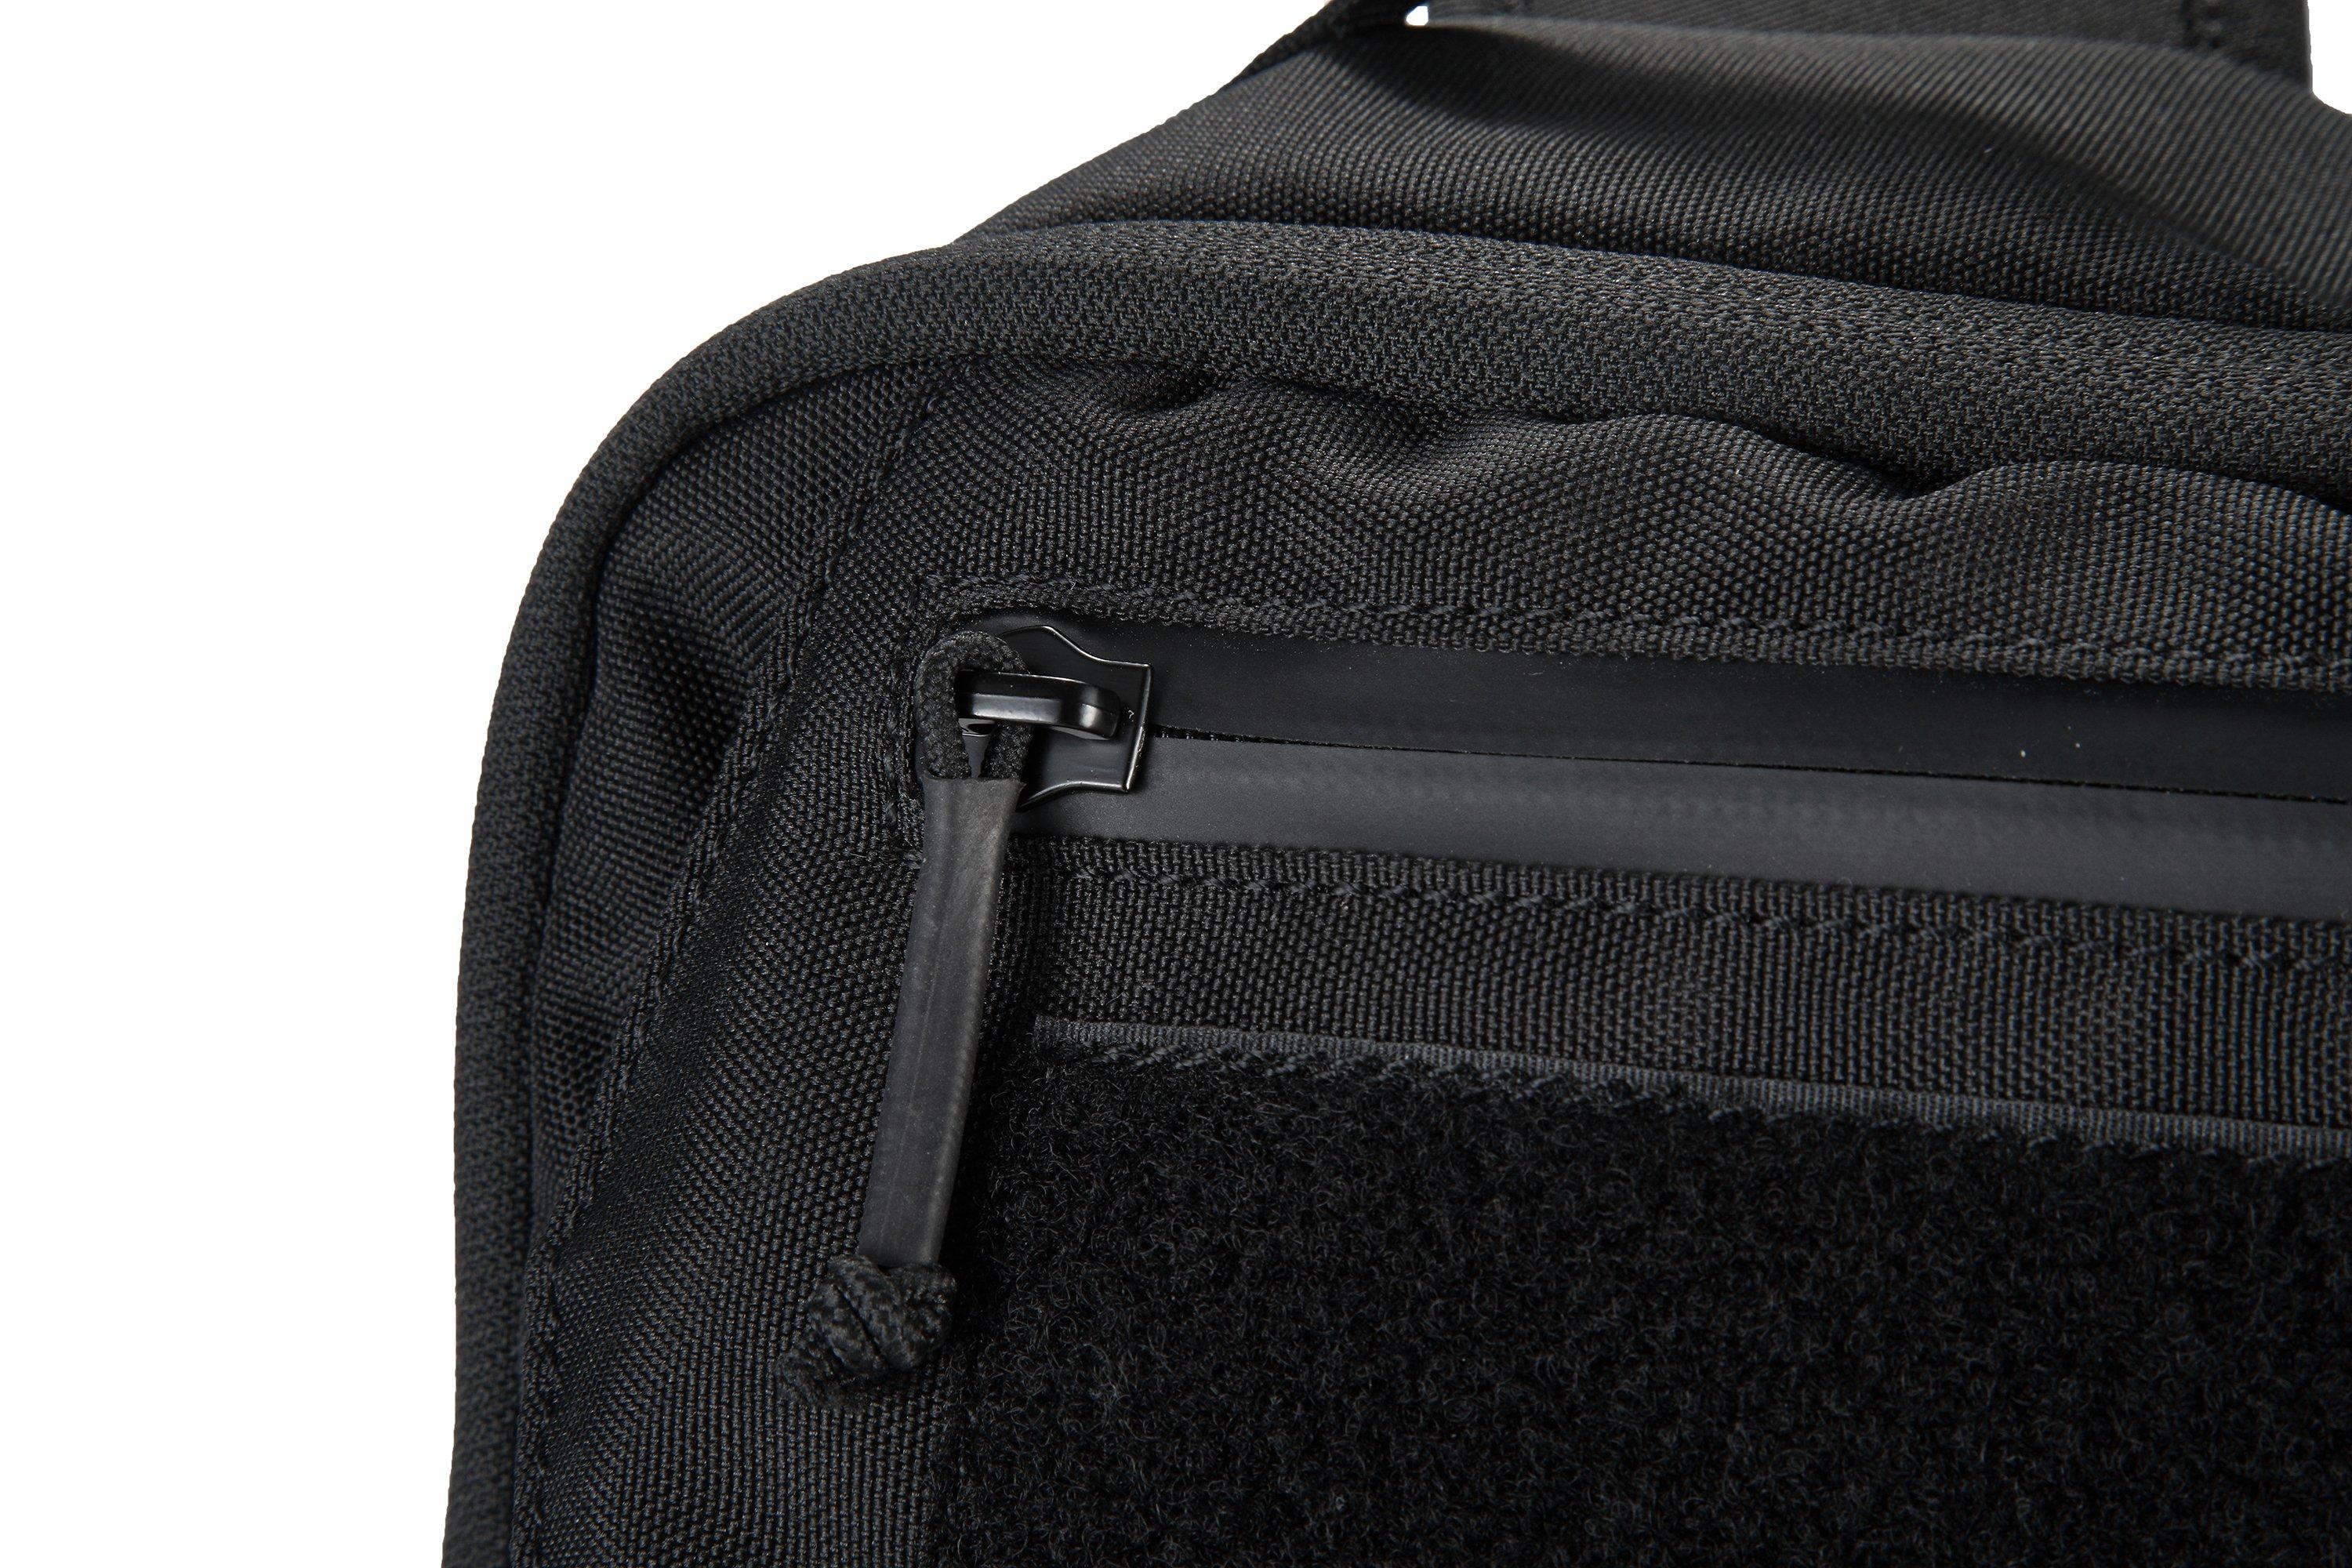  BP23 Multi-purpose Commuting Backpack, black | Advantageously .